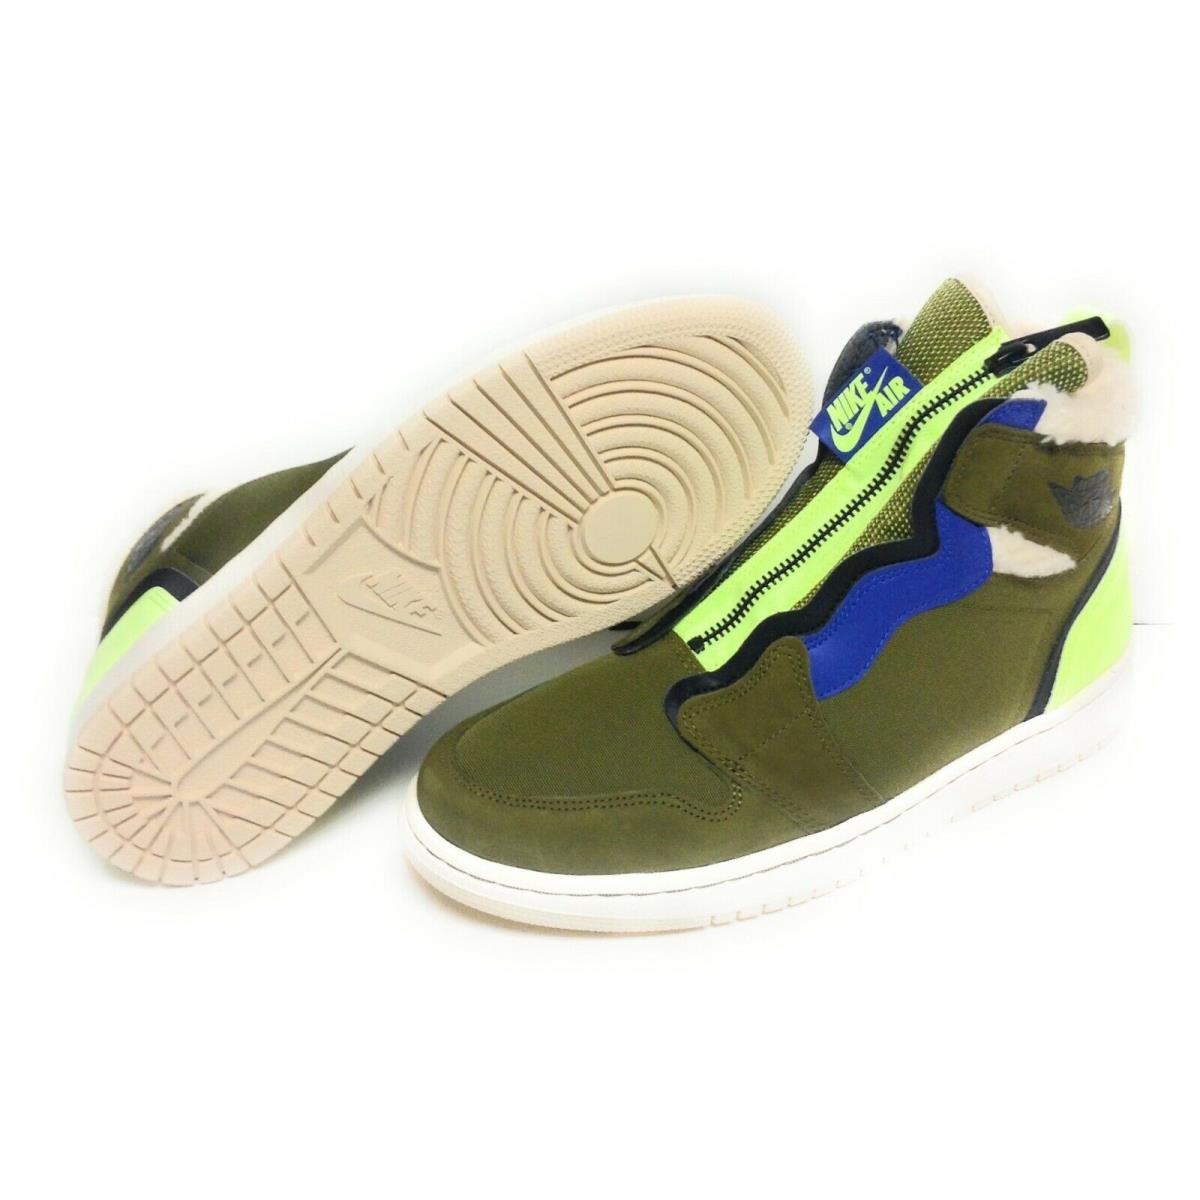 Womens Nike Air Jordan 1 High Zip Up AV3723 300 Olive Volt Green Sneakers Shoes - Green